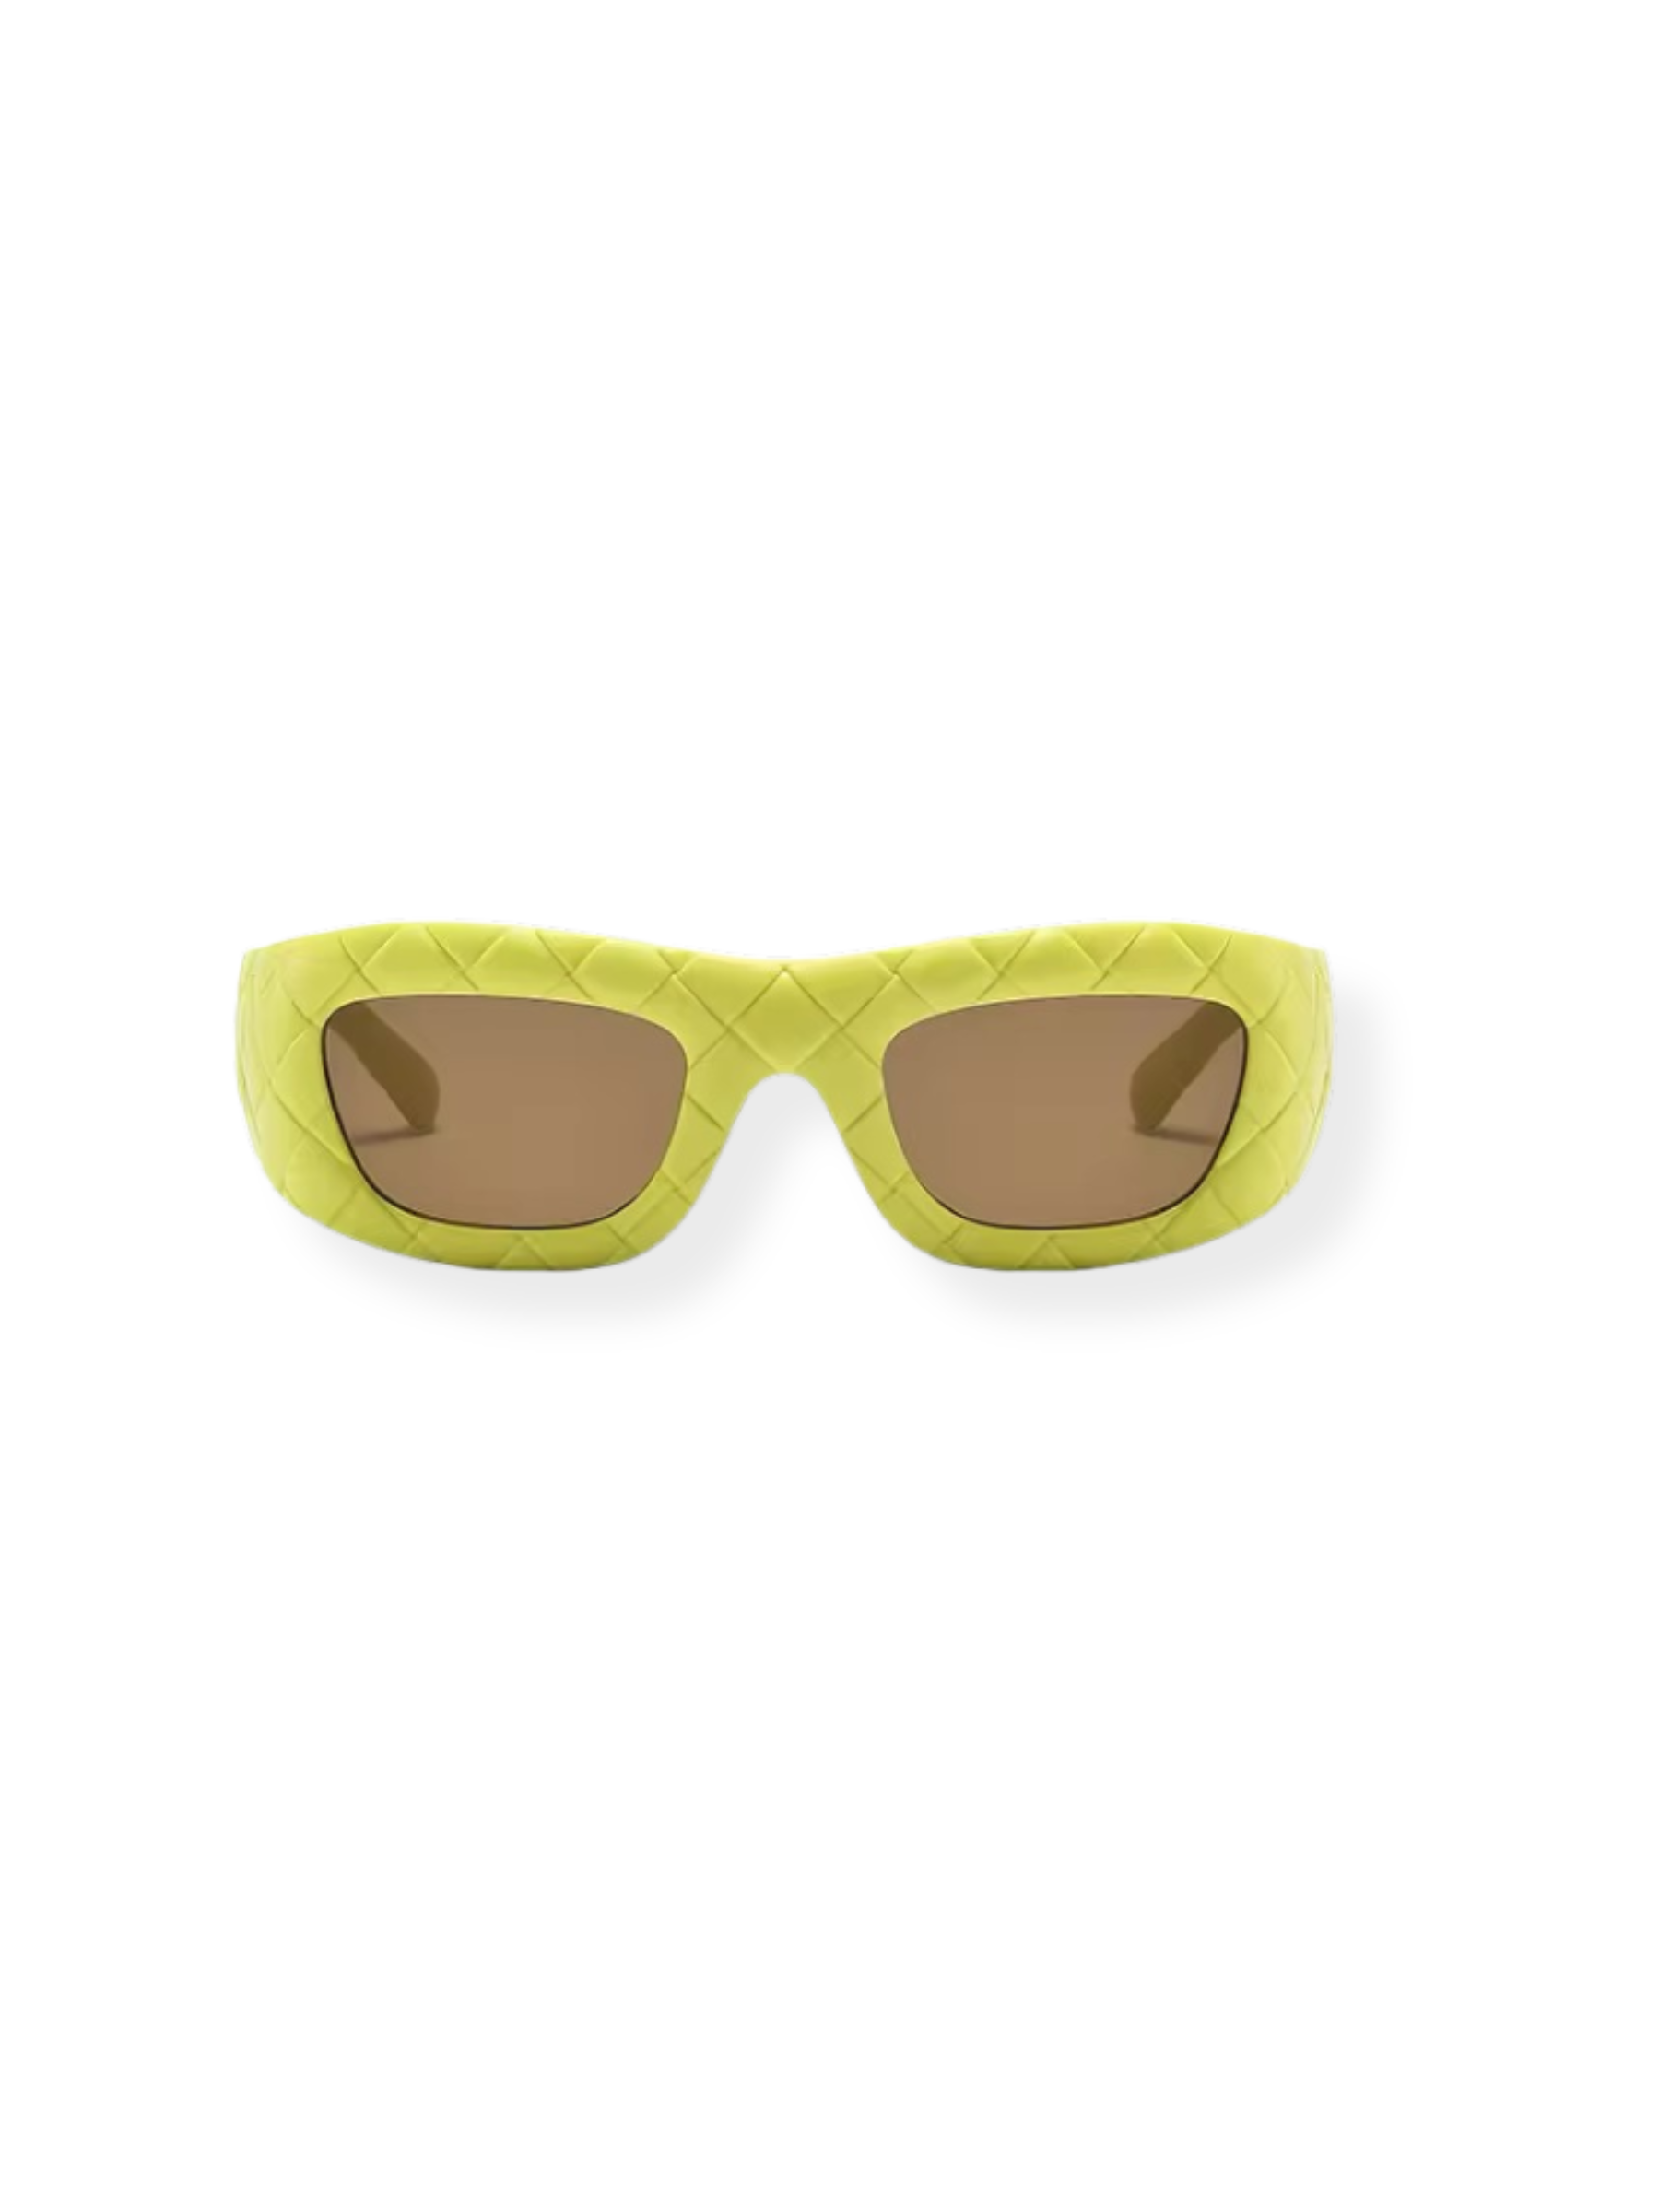 GOLDxTEAL chic lattice frame sunglasses.